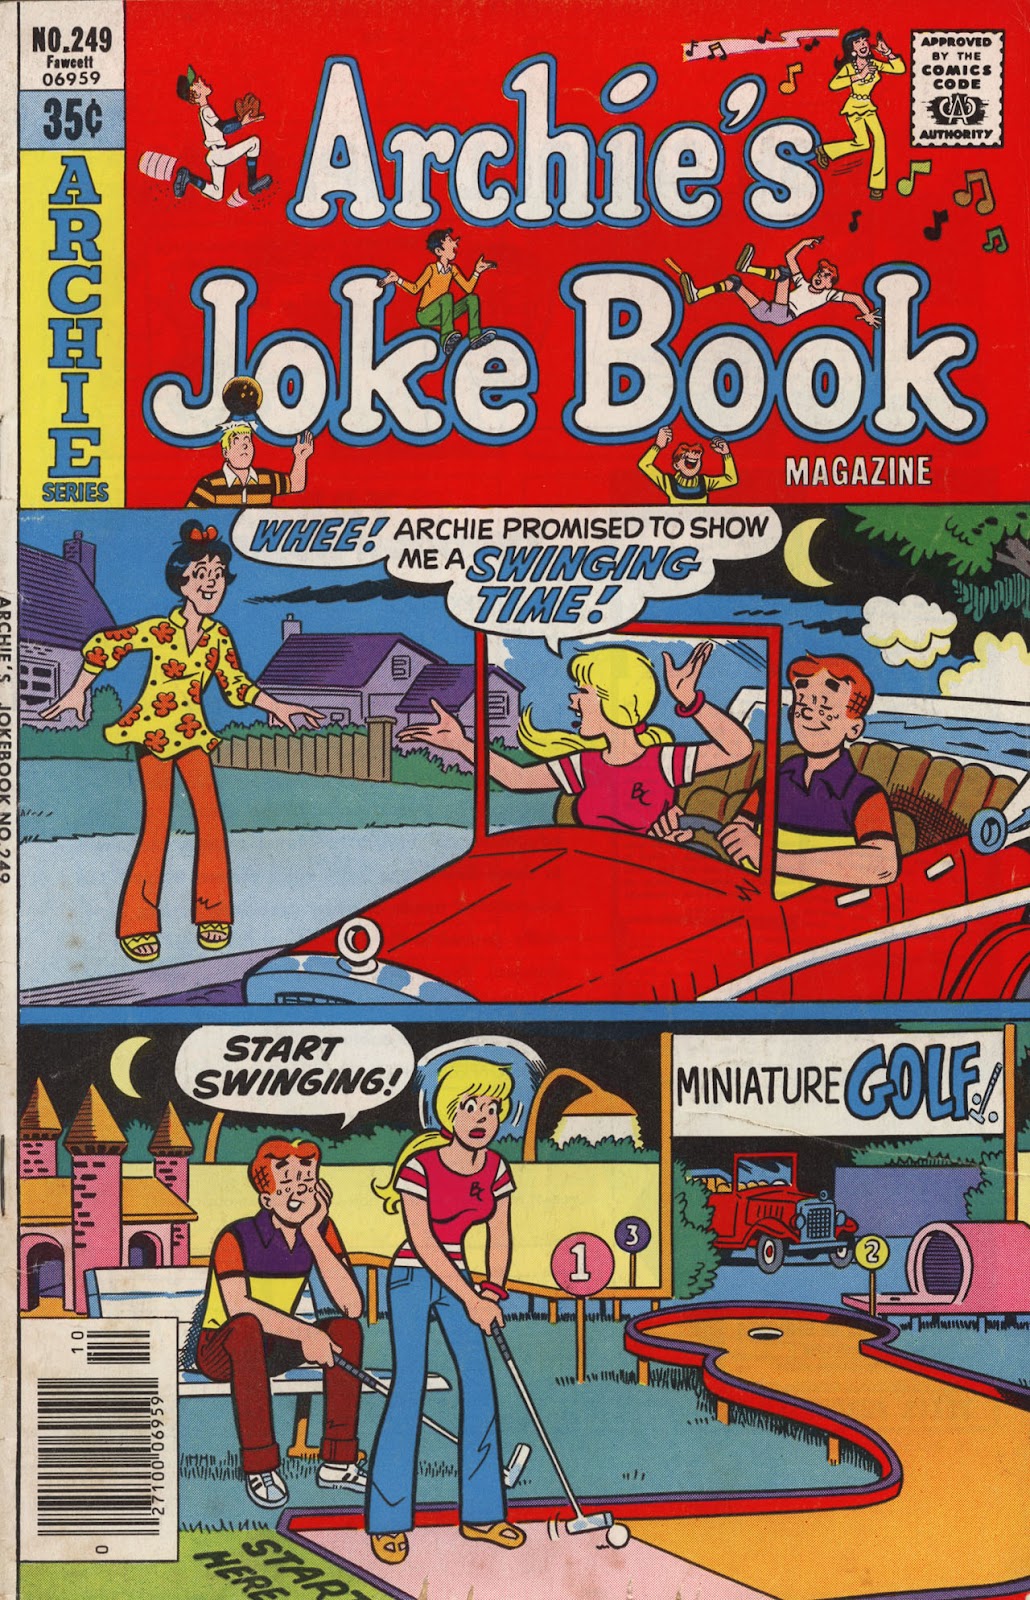 Archie's Joke Book Magazine issue 249 - Page 1